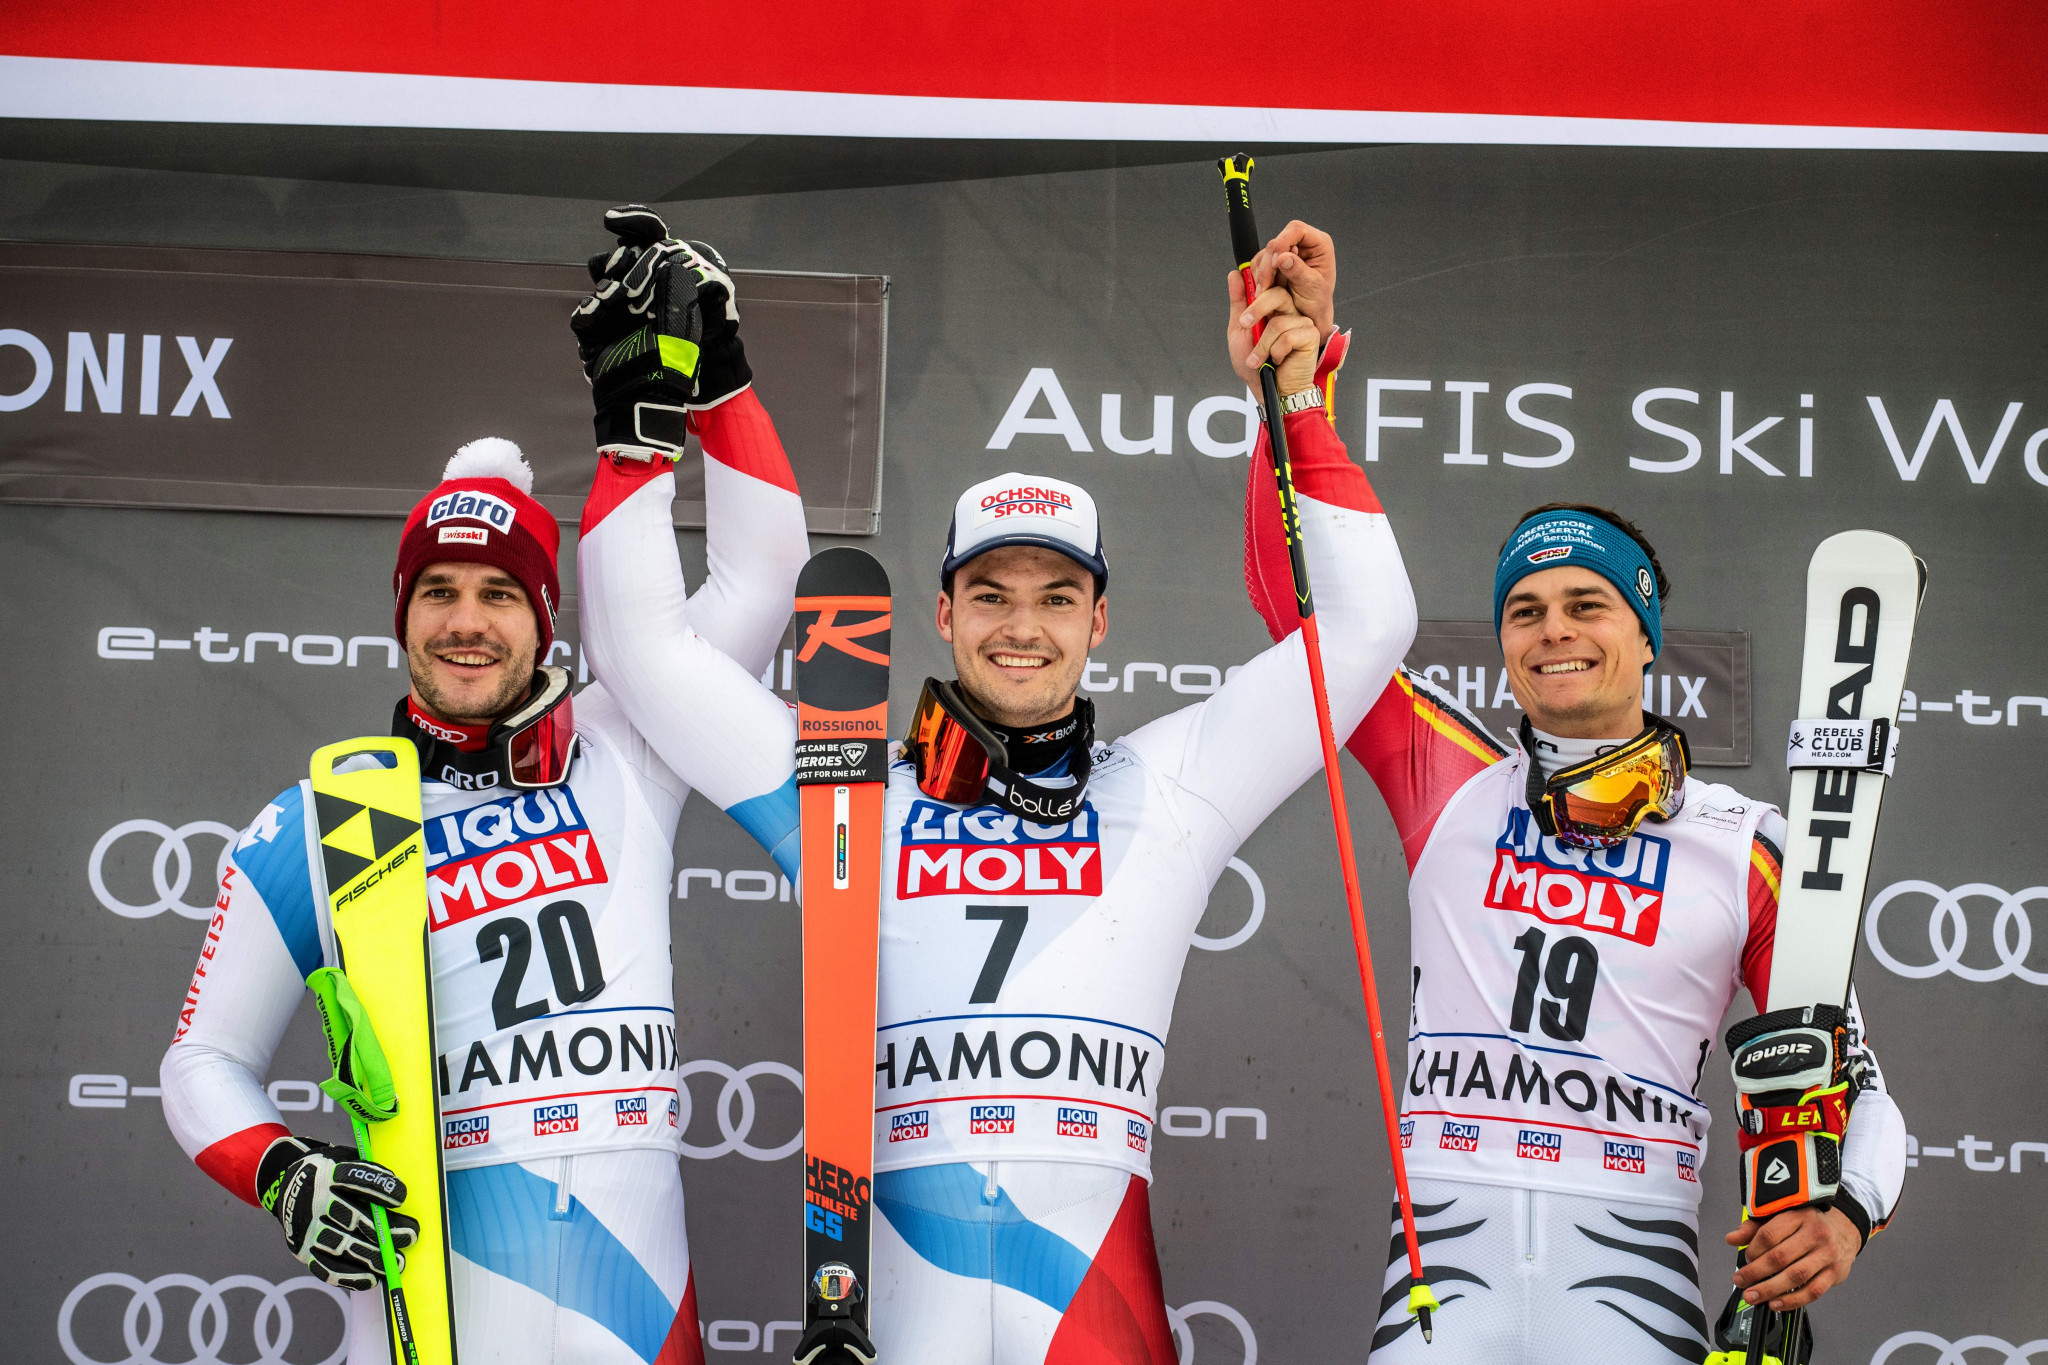 Meillard wins first FIS Alpine Ski World Cup event in Chamonix